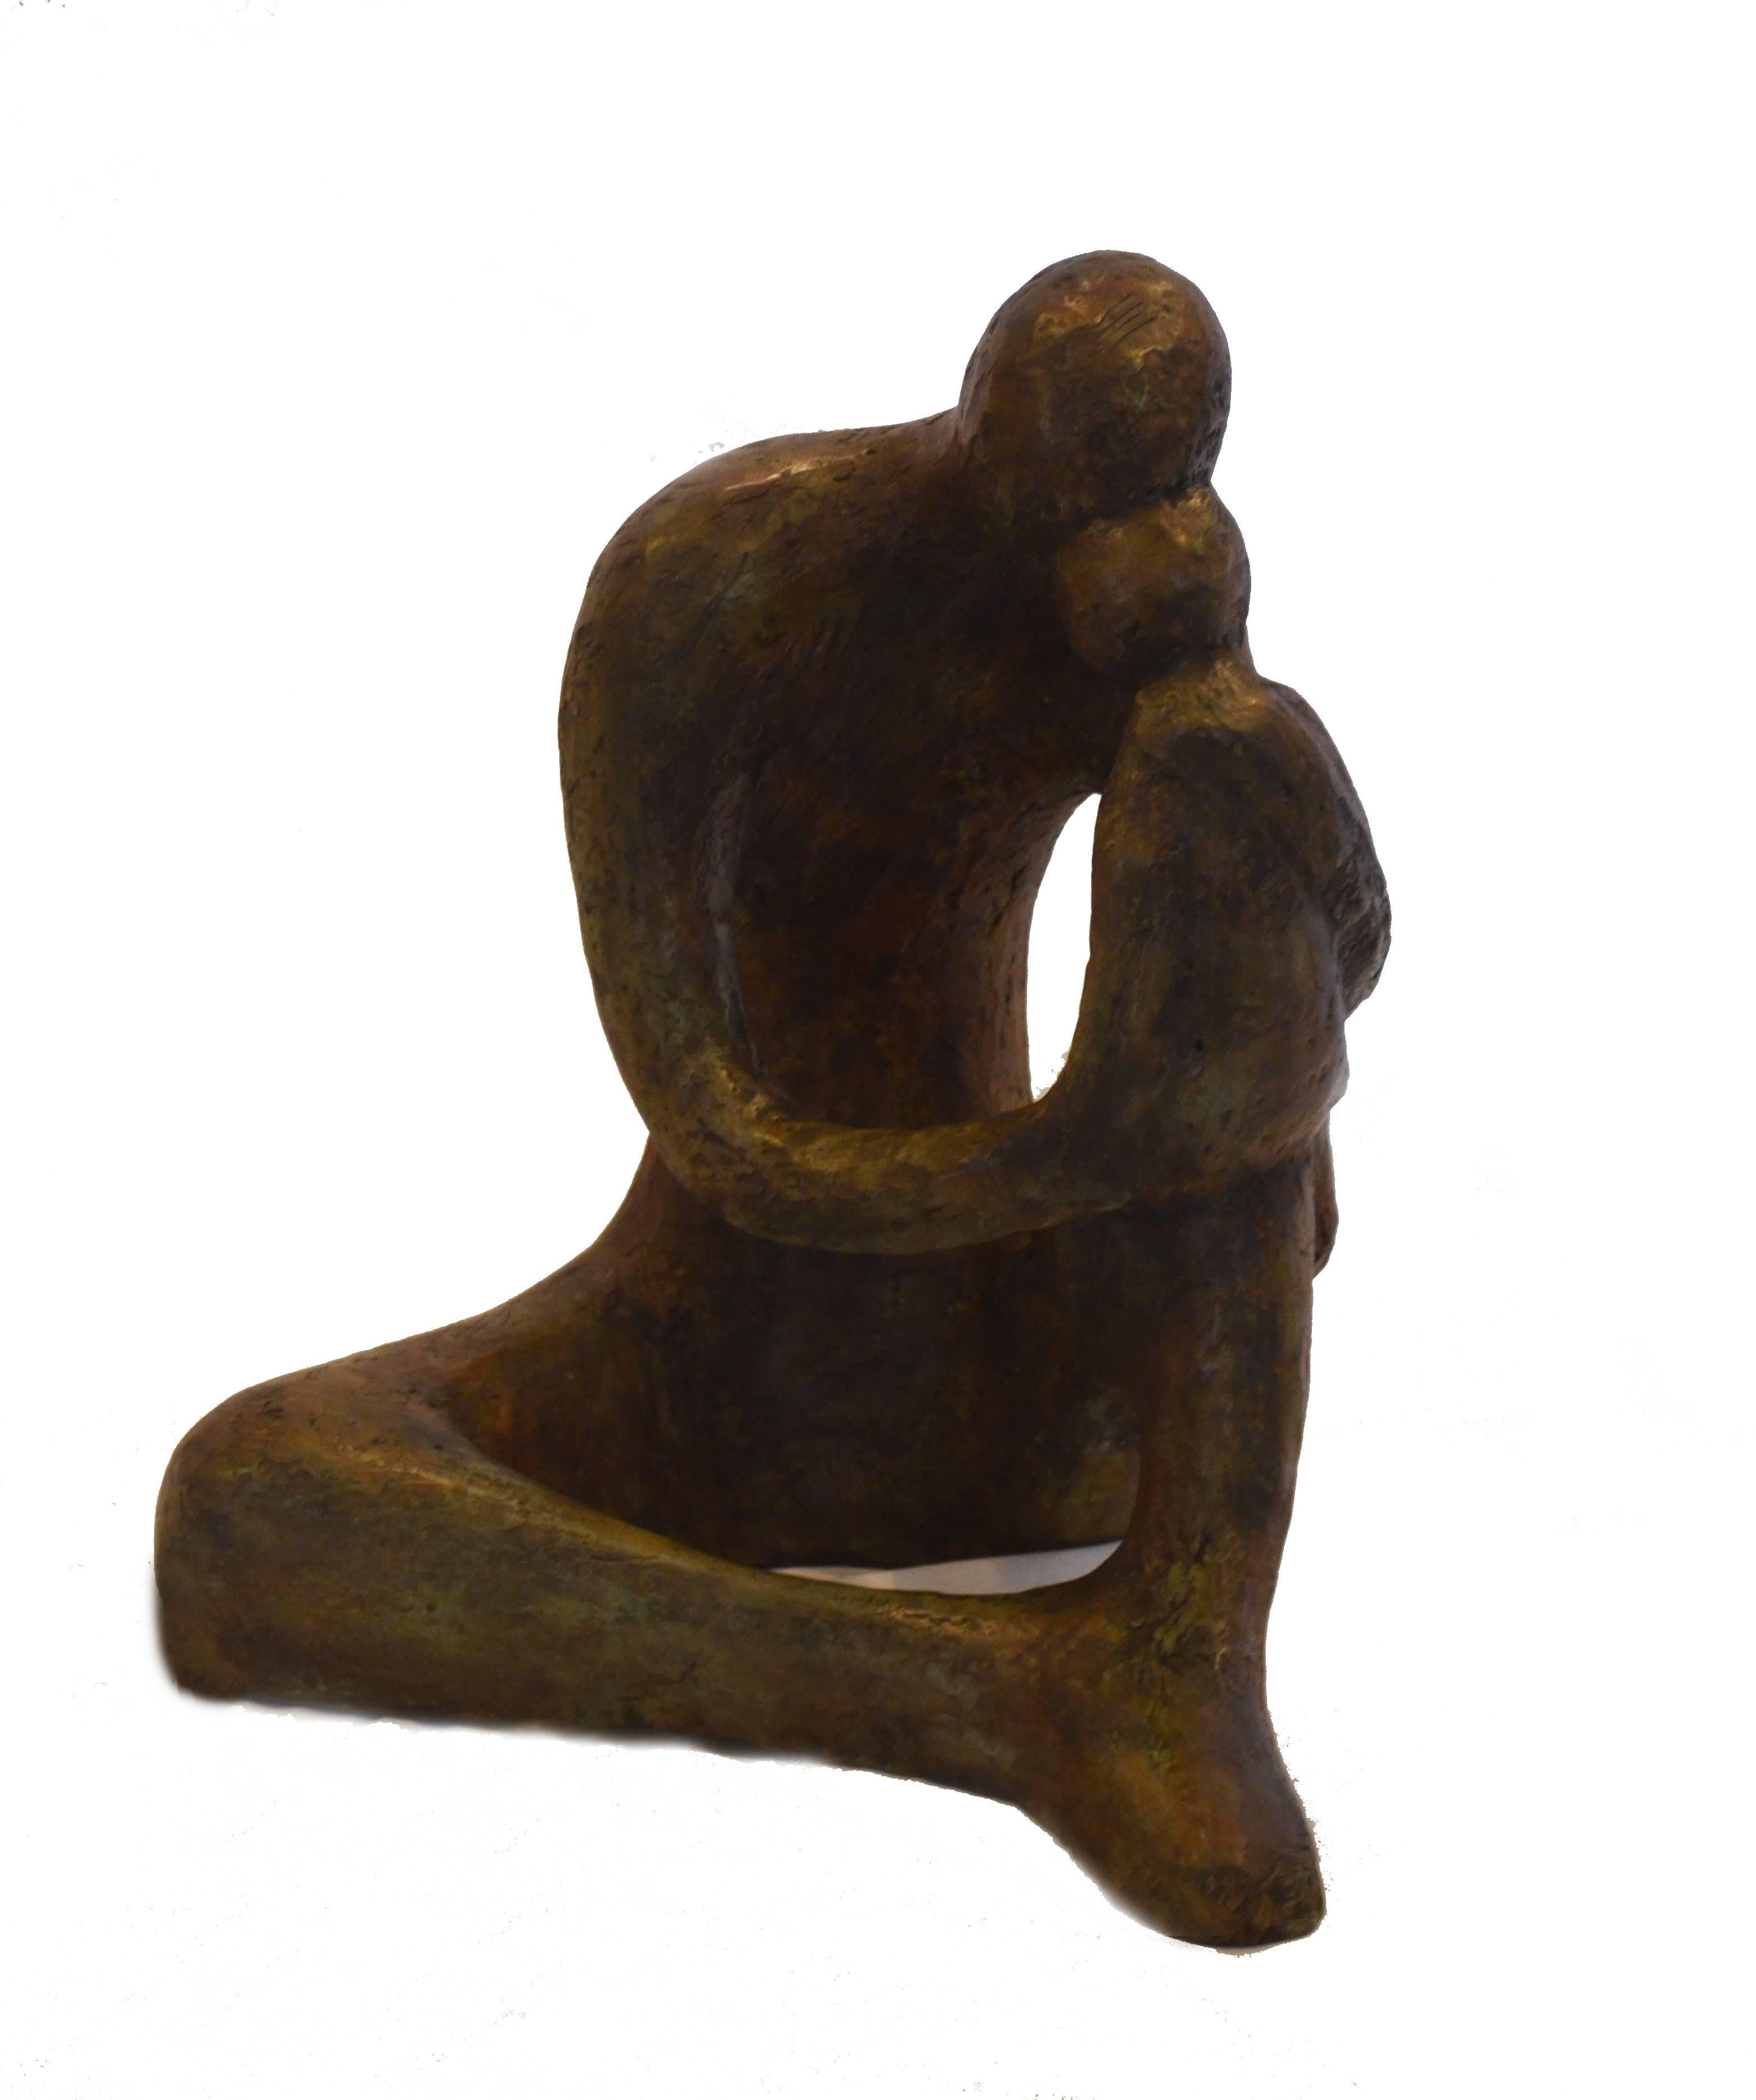 Ruth Bloch Figurative Sculpture – Fatherhood, Edition 1 of 1